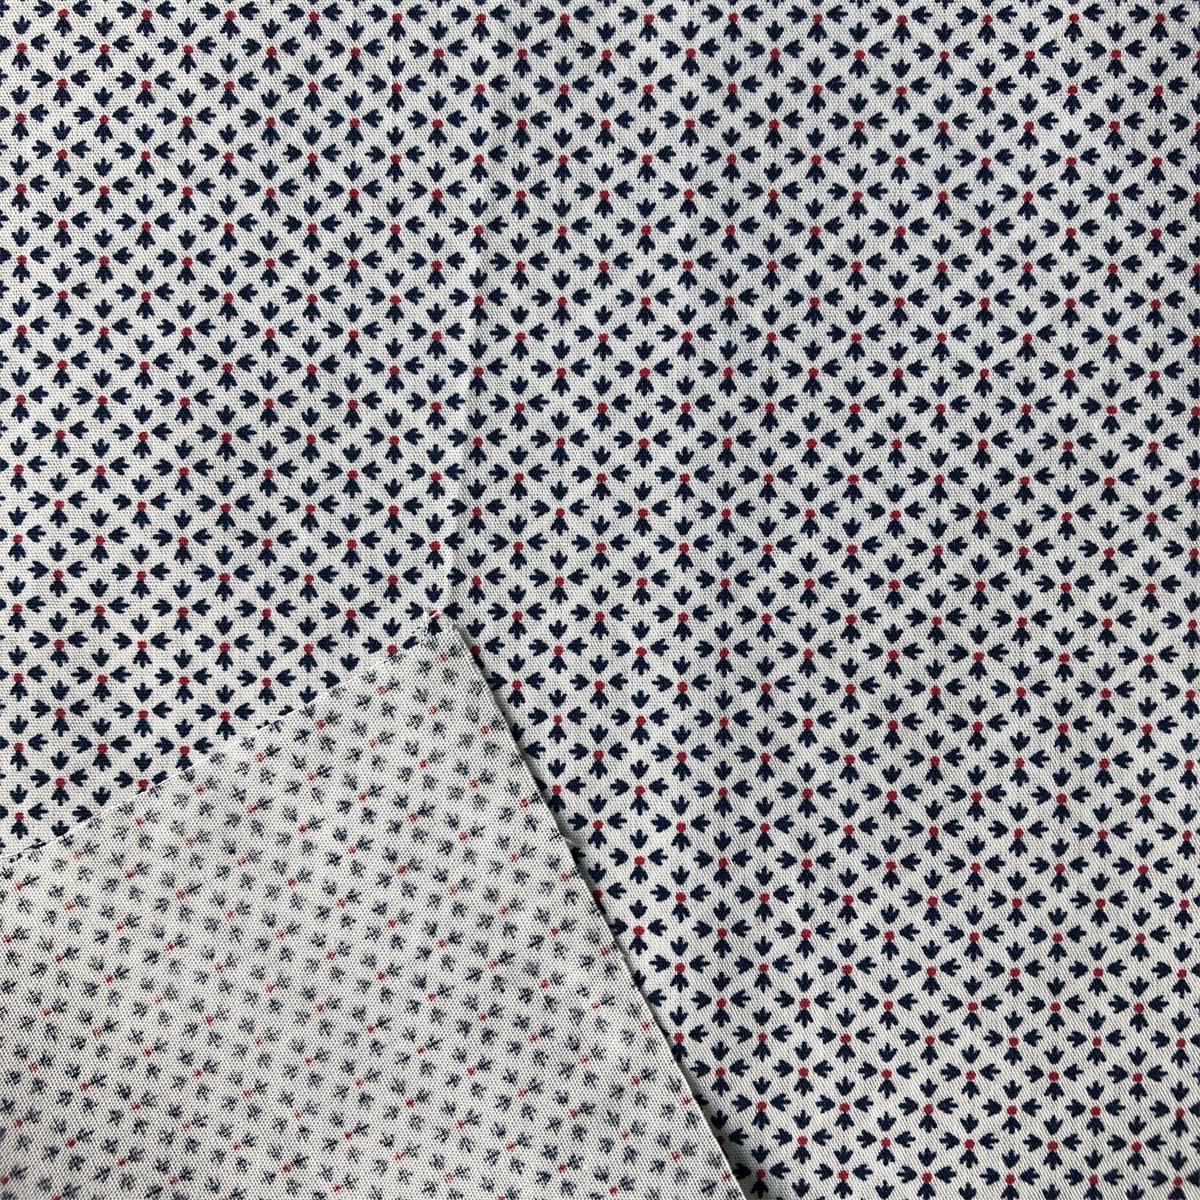 Eco-friendly Mens casual shirt print fabric Cotton fabric hot sale high quality soft 100cotton poplin printed fabric